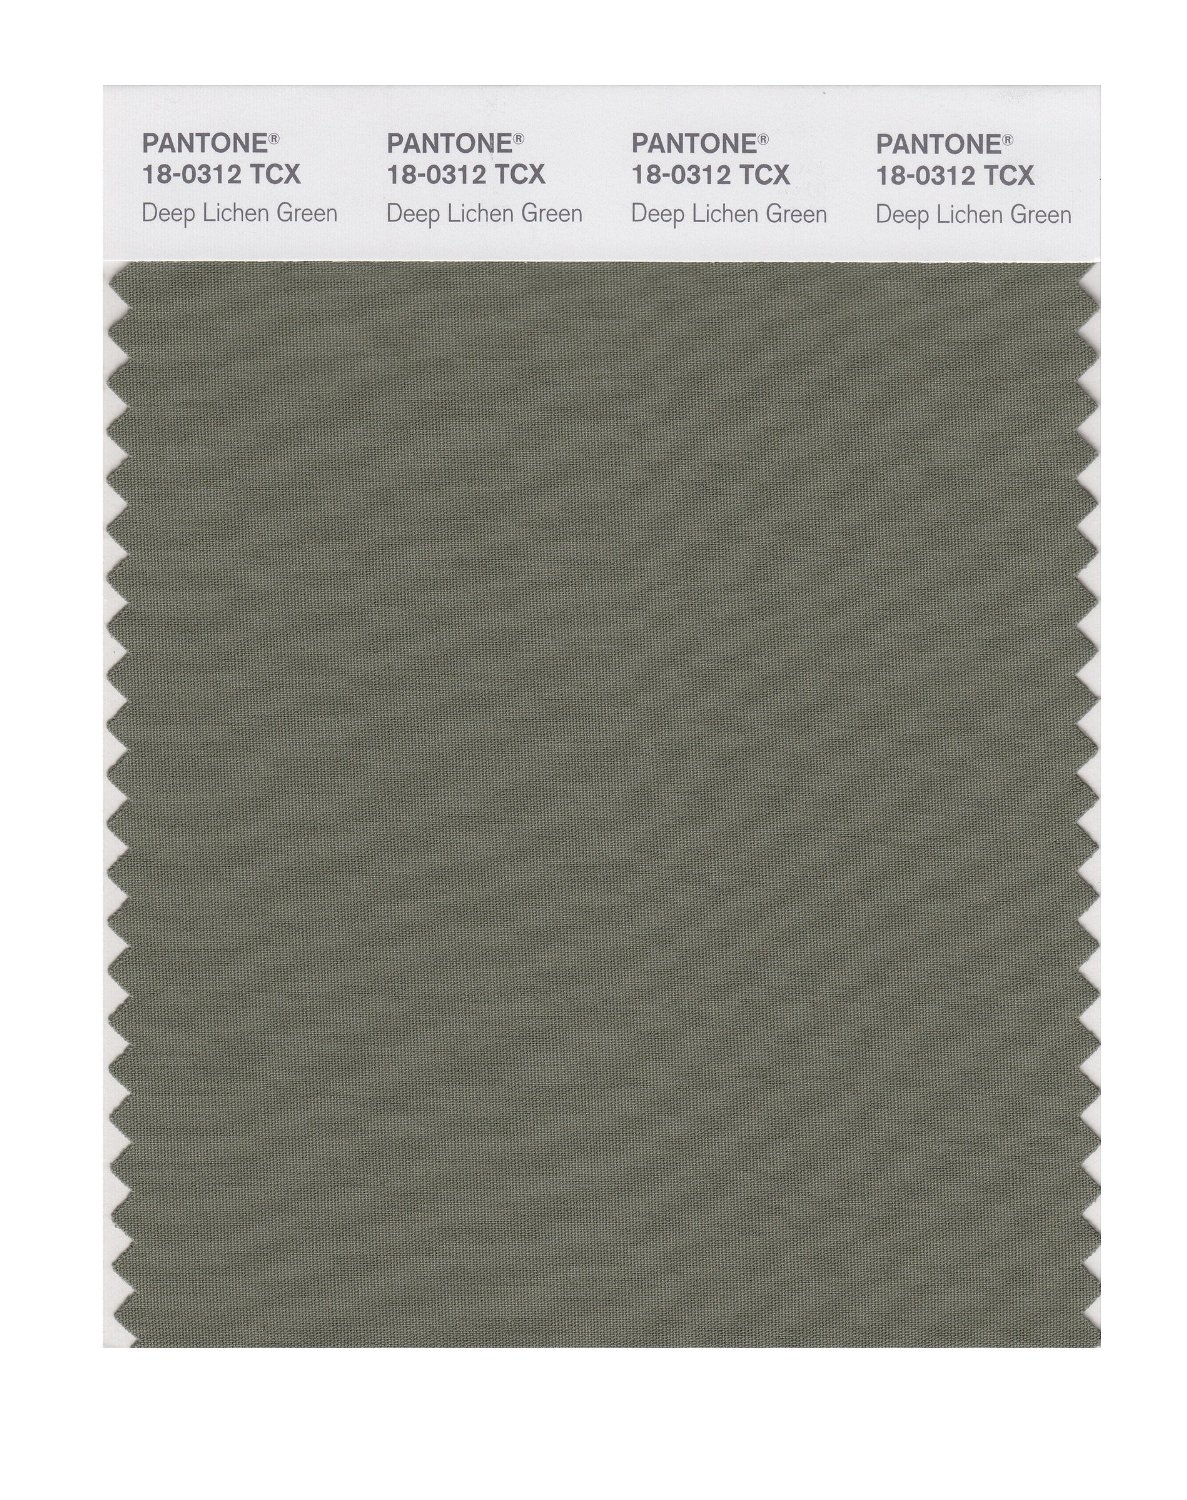 BUY Pantone Cotton Swatch 18-0312 Dp Lichen Green